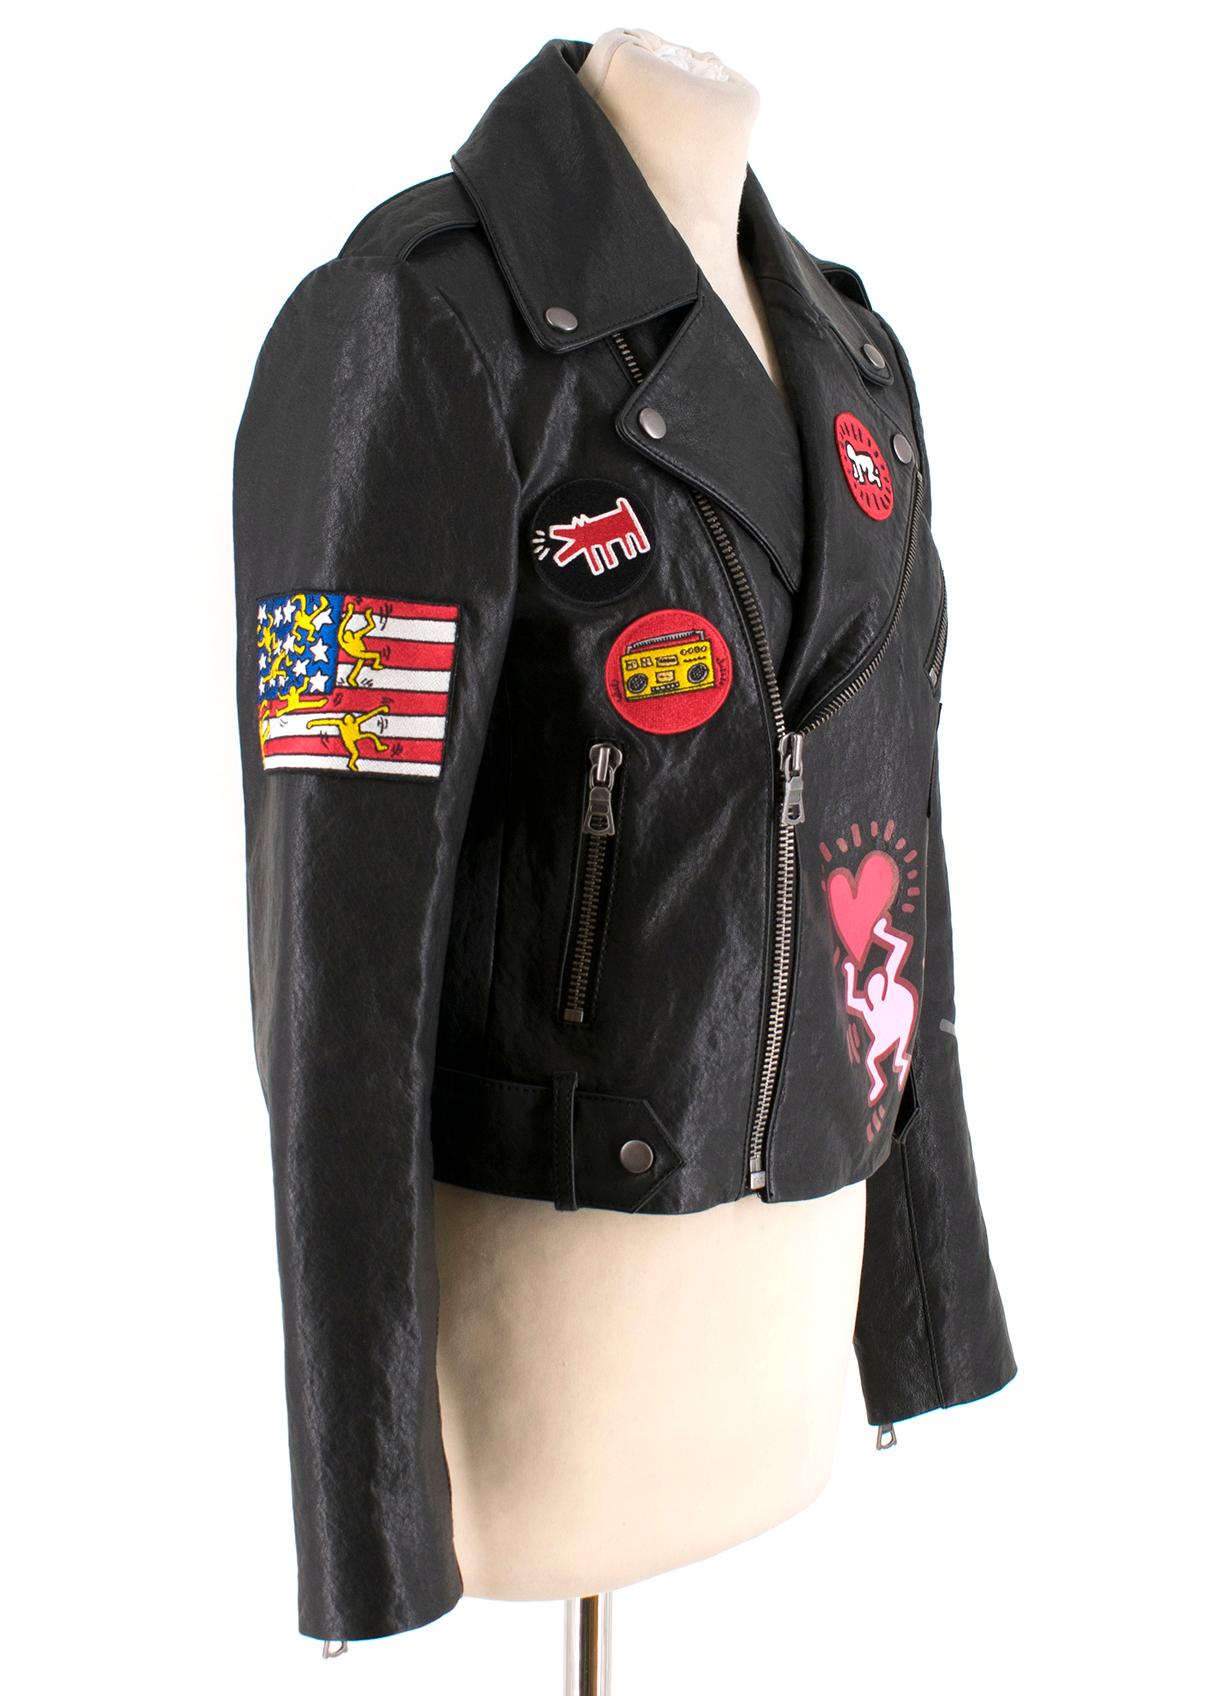 Keith Haring x Alice + Olivia Cody leather jacket - Current Season 